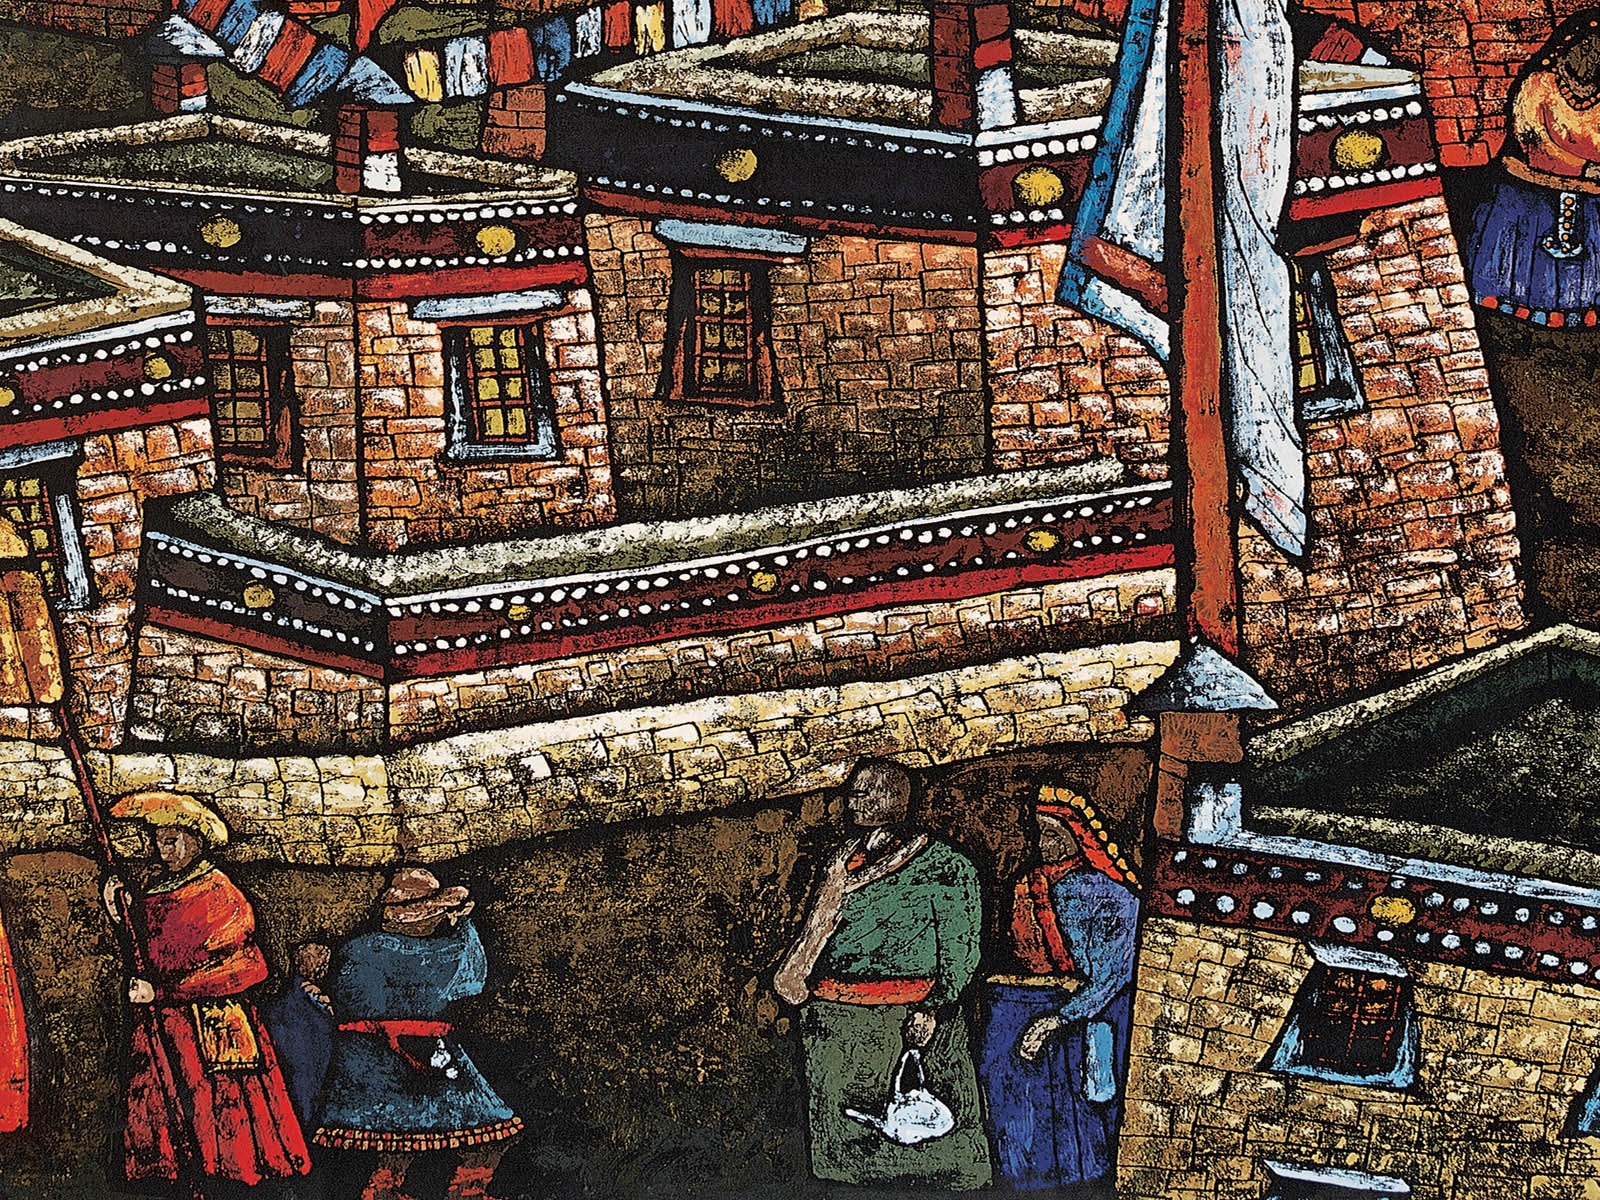 Cheung Pakistan fond d'écran d'impression du Tibet (1) #19 - 1600x1200